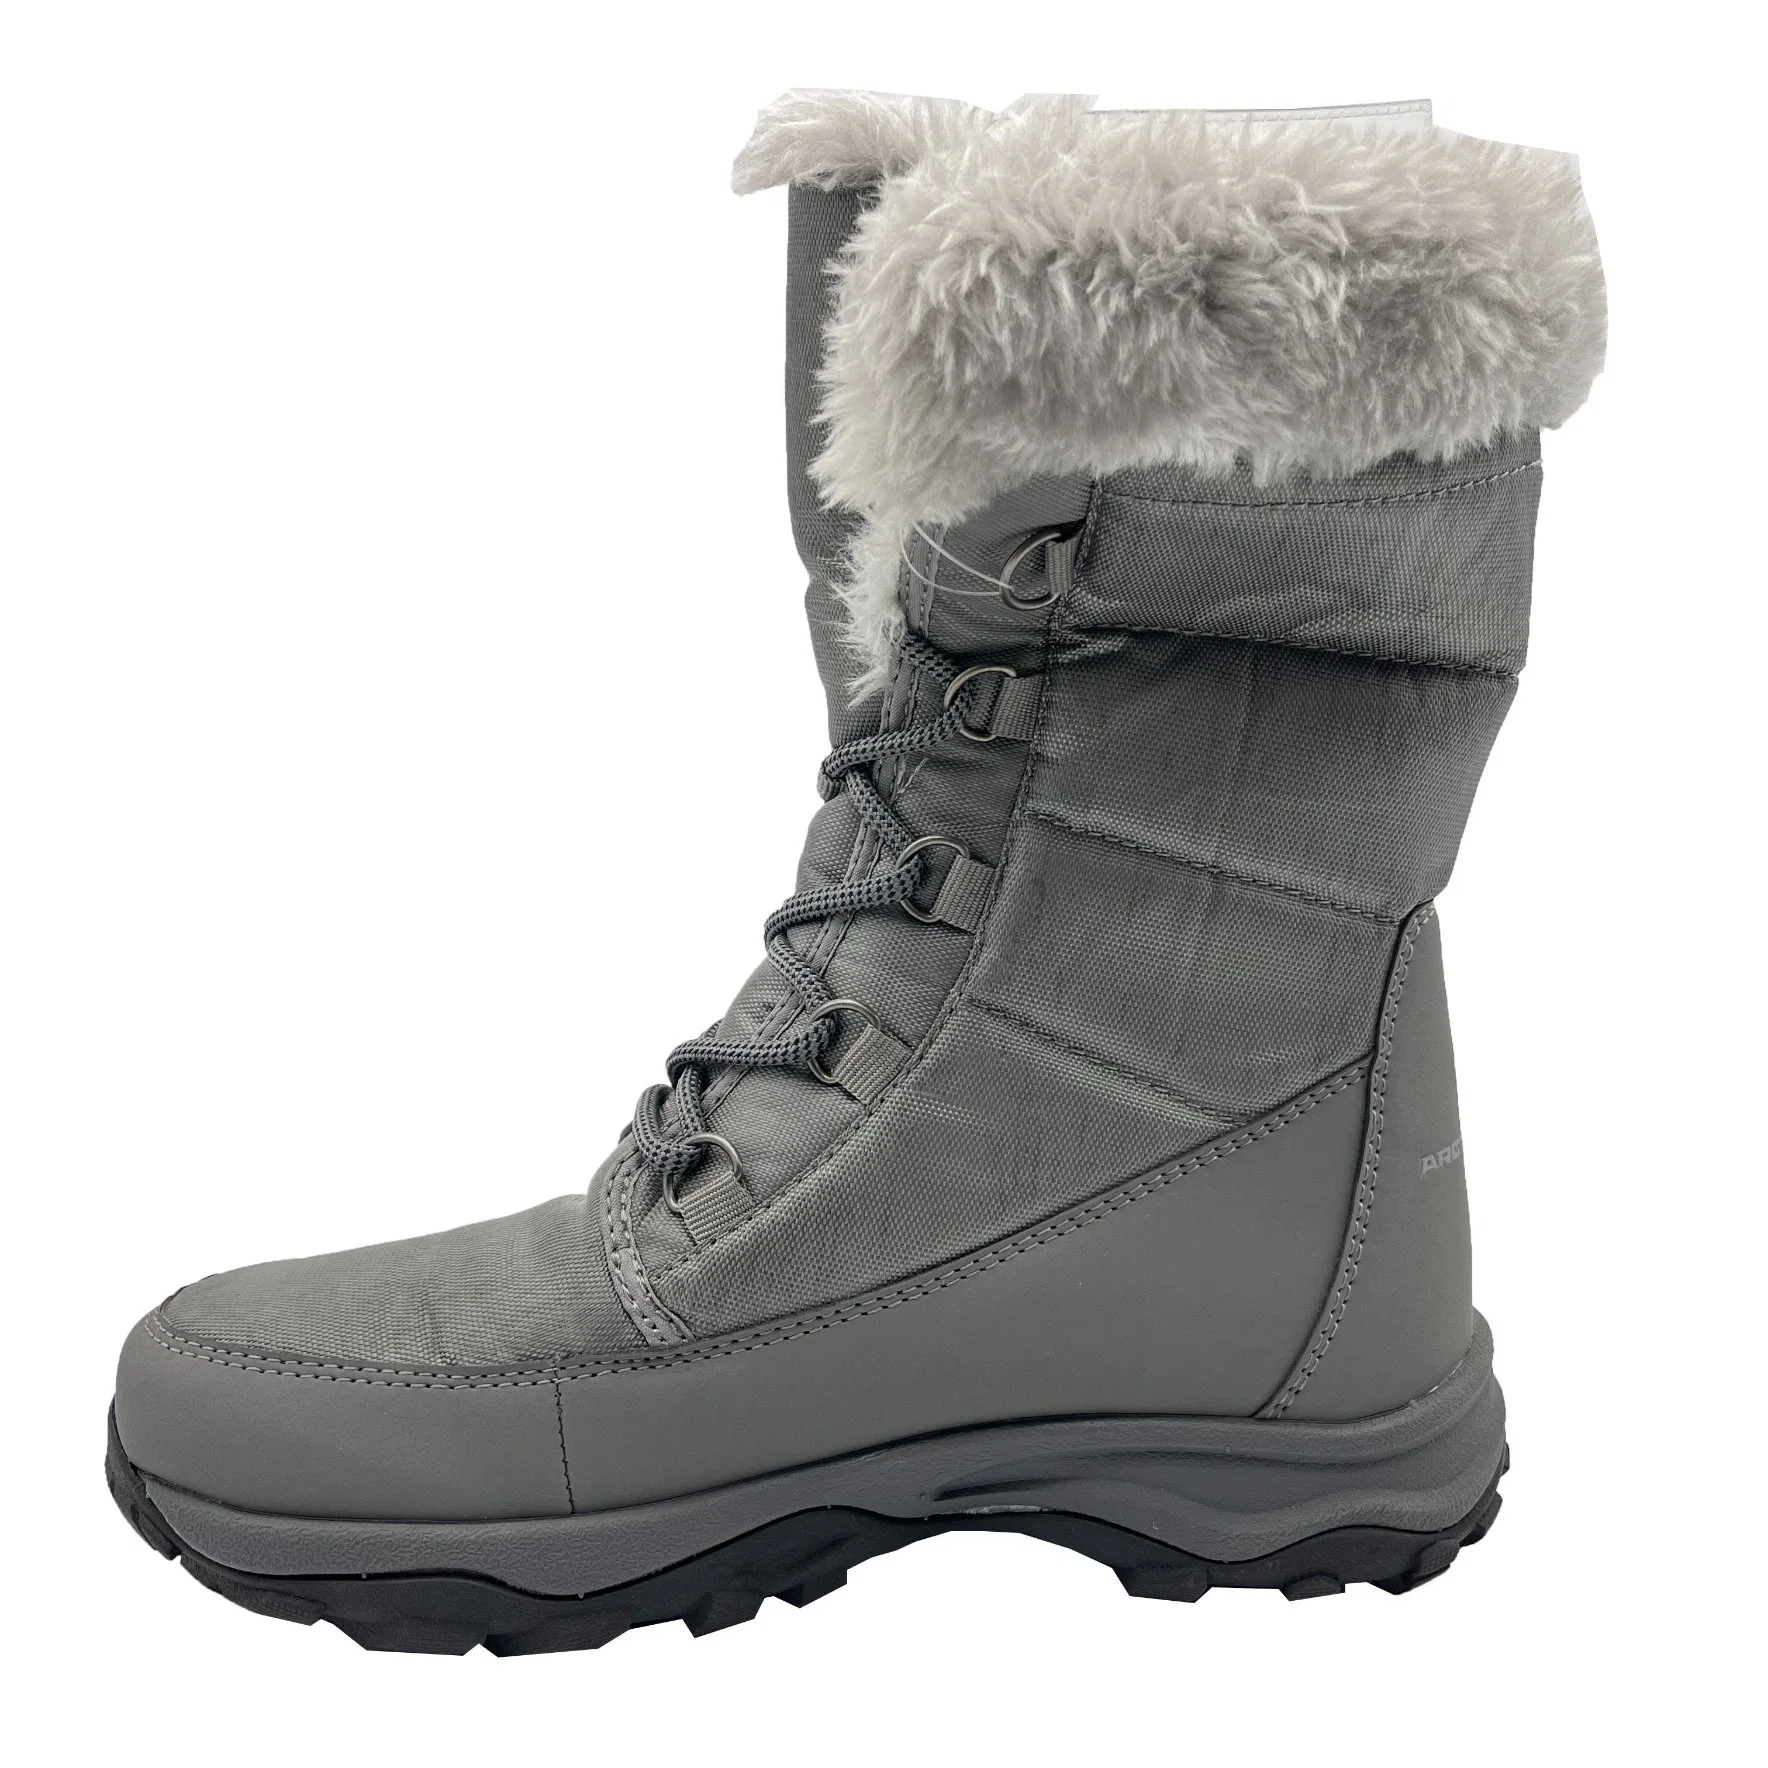 Snow Boots Fluffy Fur Shoes Warm Winter Ladies Women's